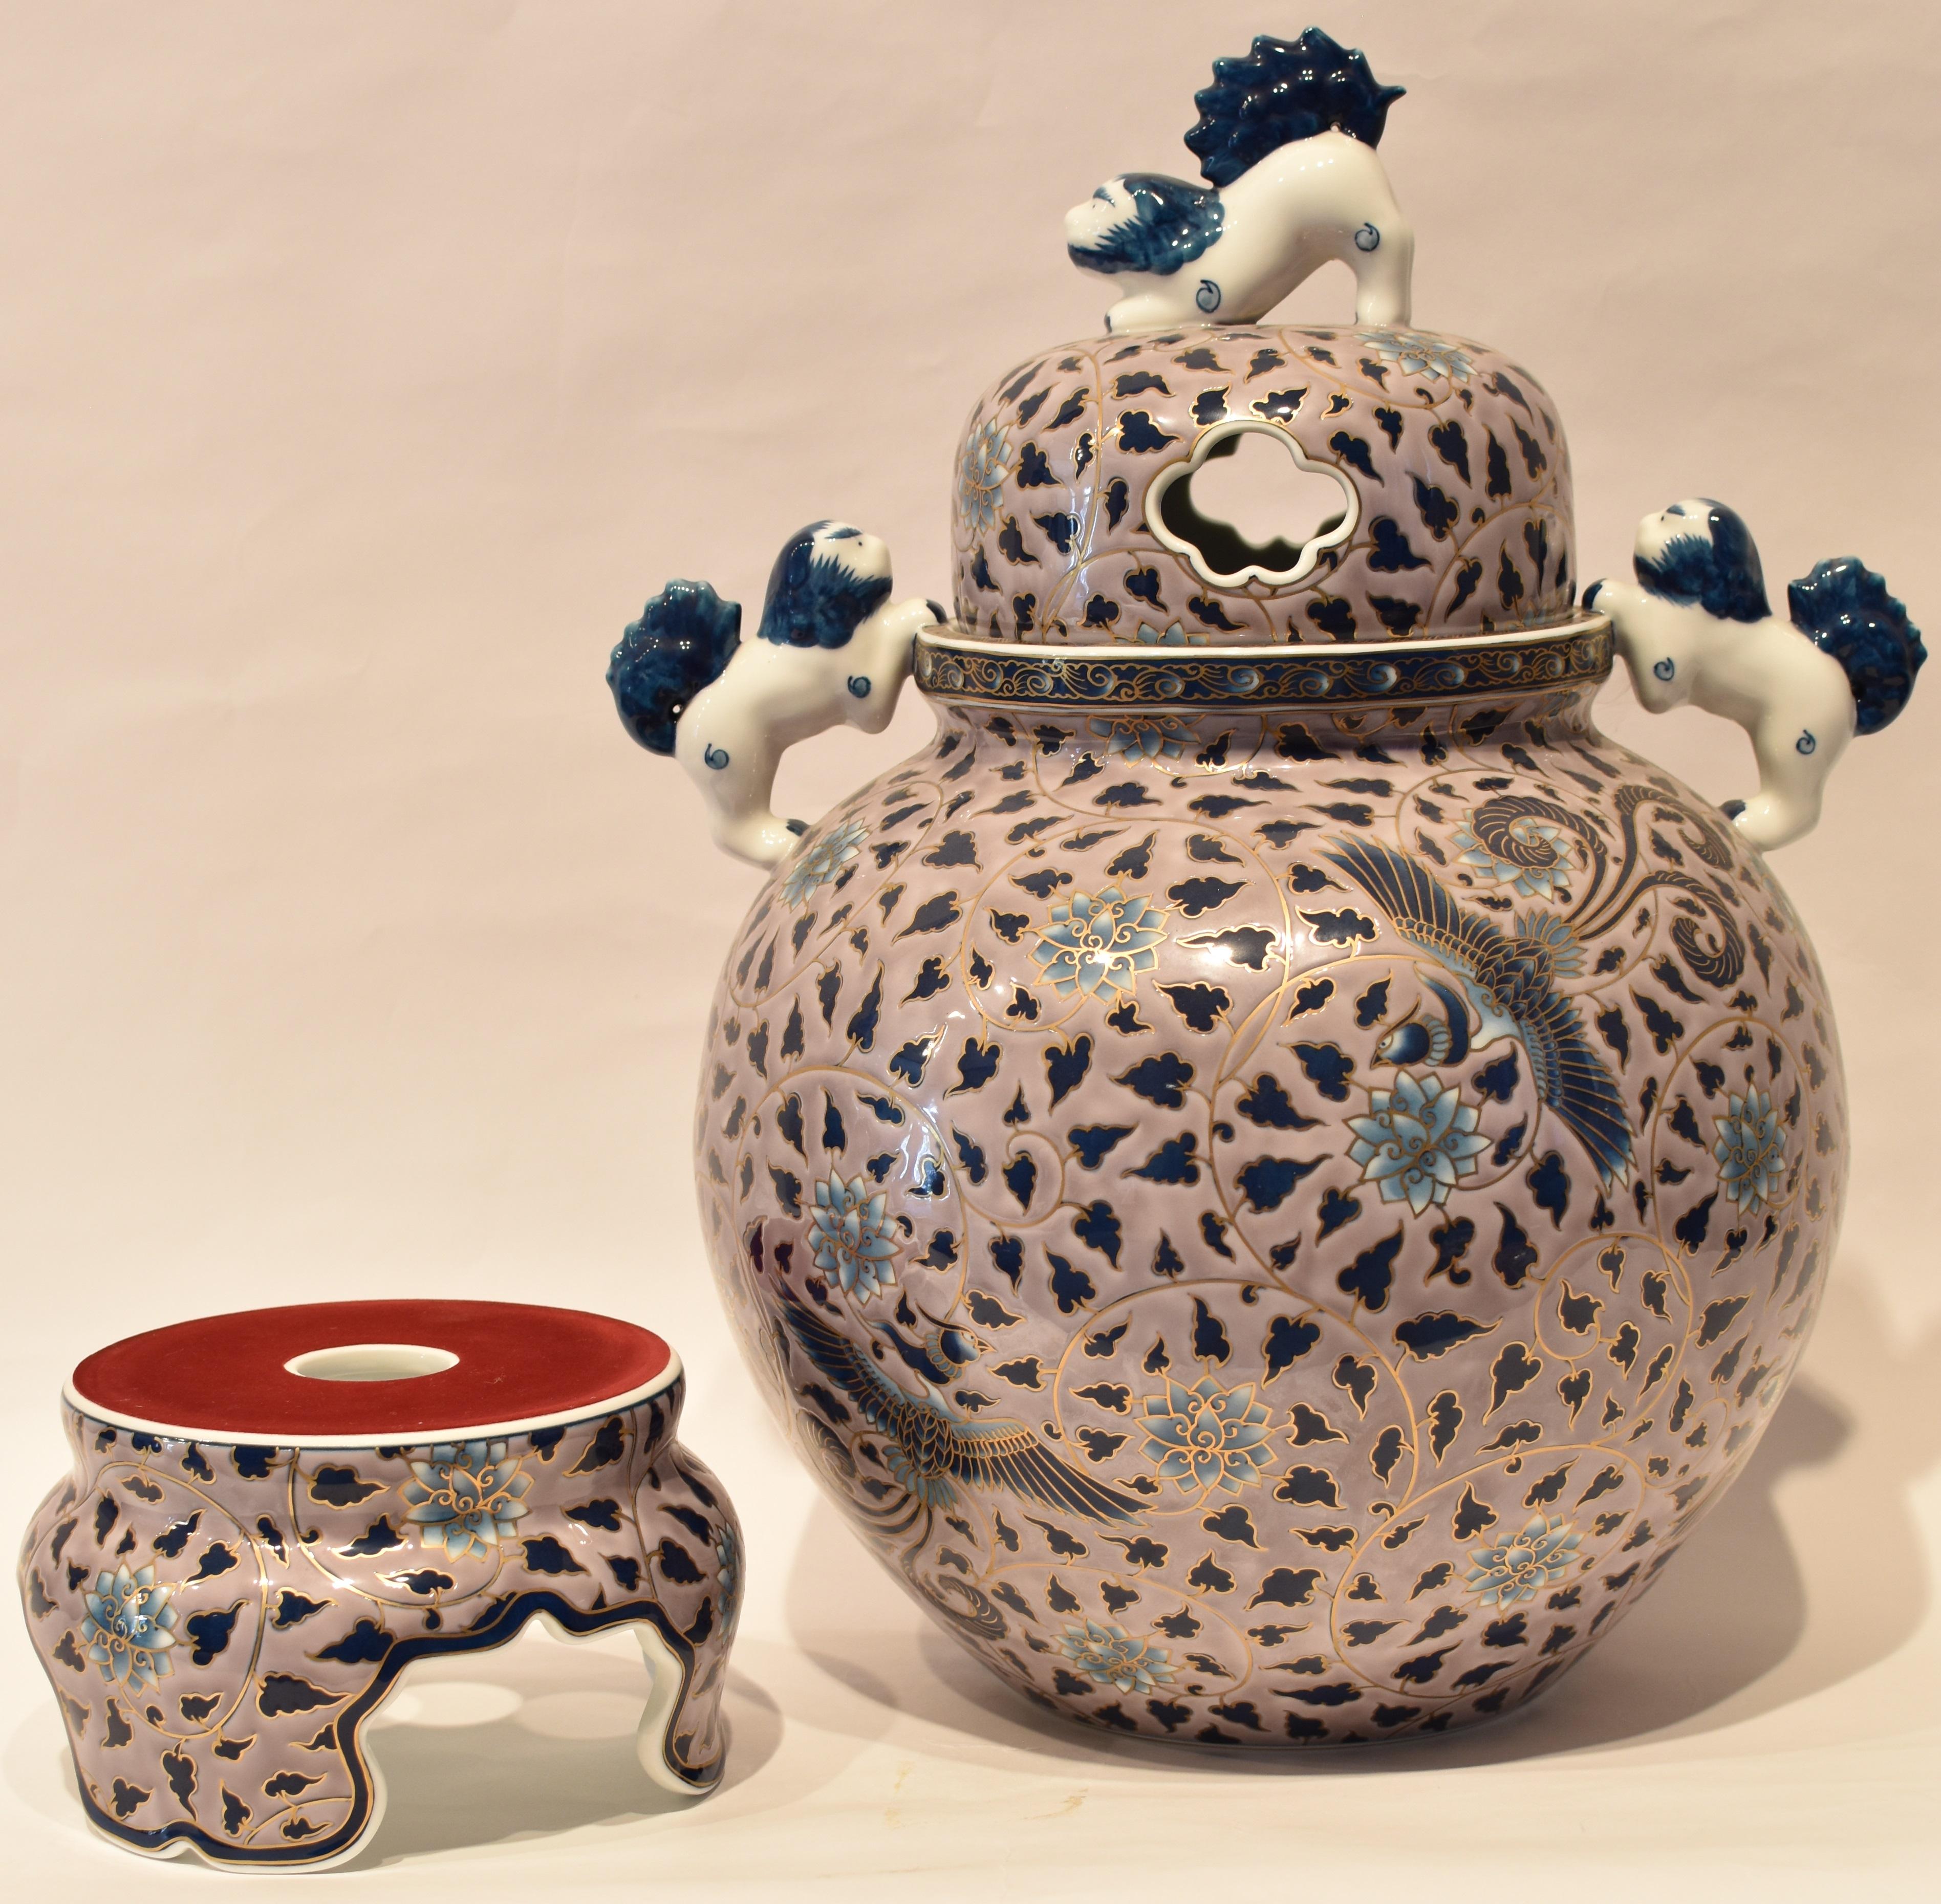 Contemporary Japanese Purple Blue Three-Piece Lidded Porcelain Jar by Master Artist